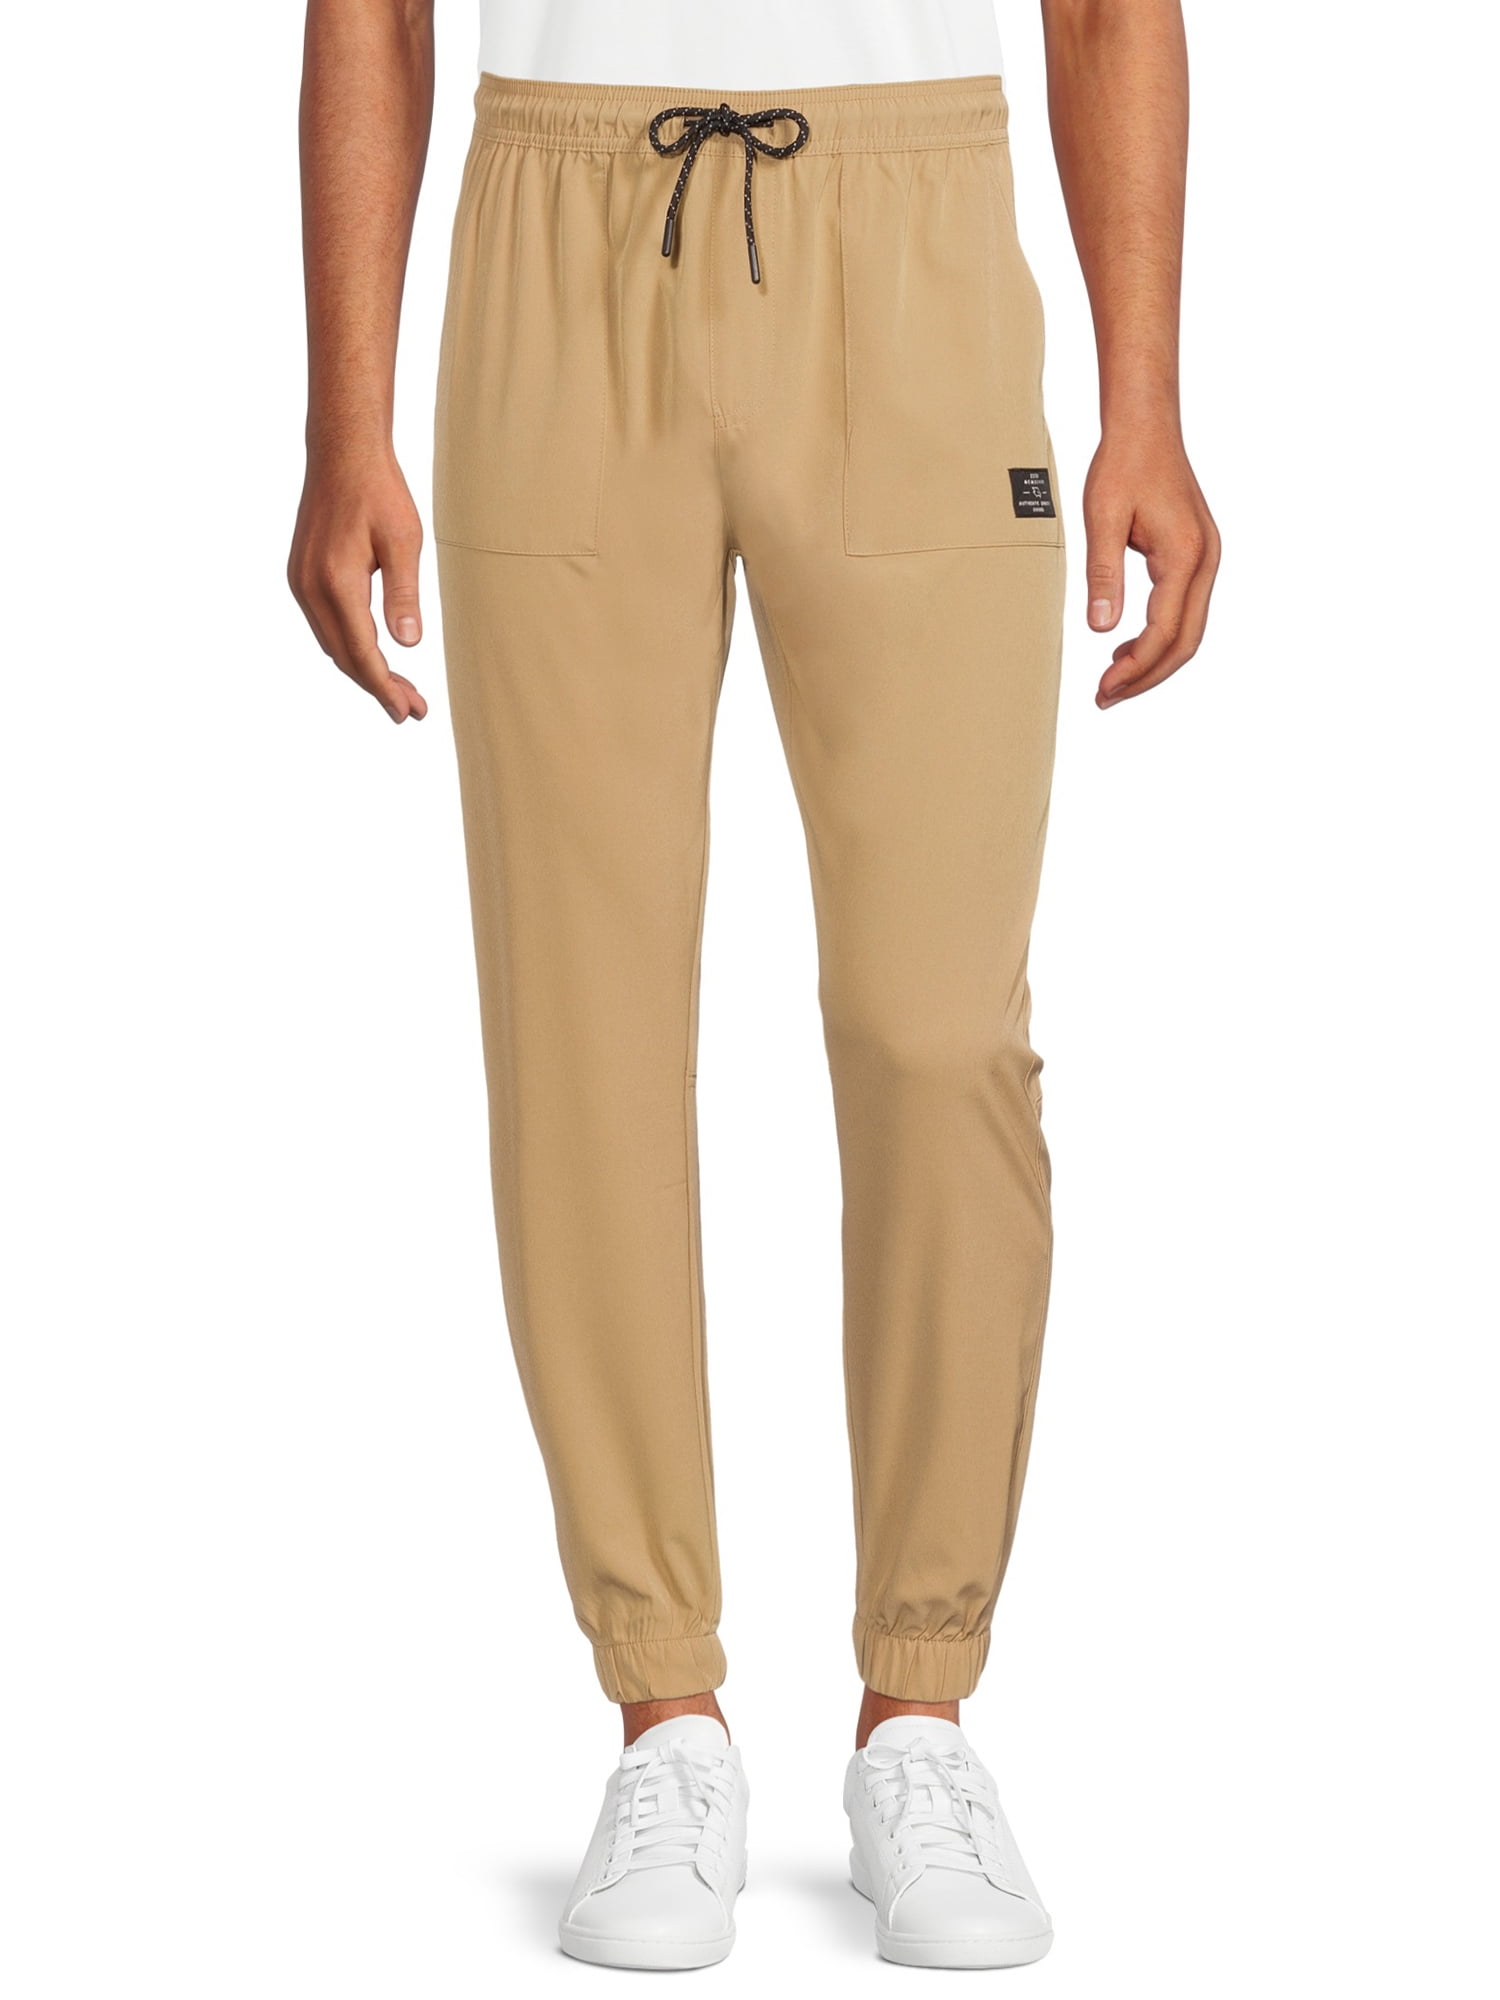 Tony Hawk Men's Stretch Tech Woven Jogger Pants, Sizes S-XL - Walmart.com